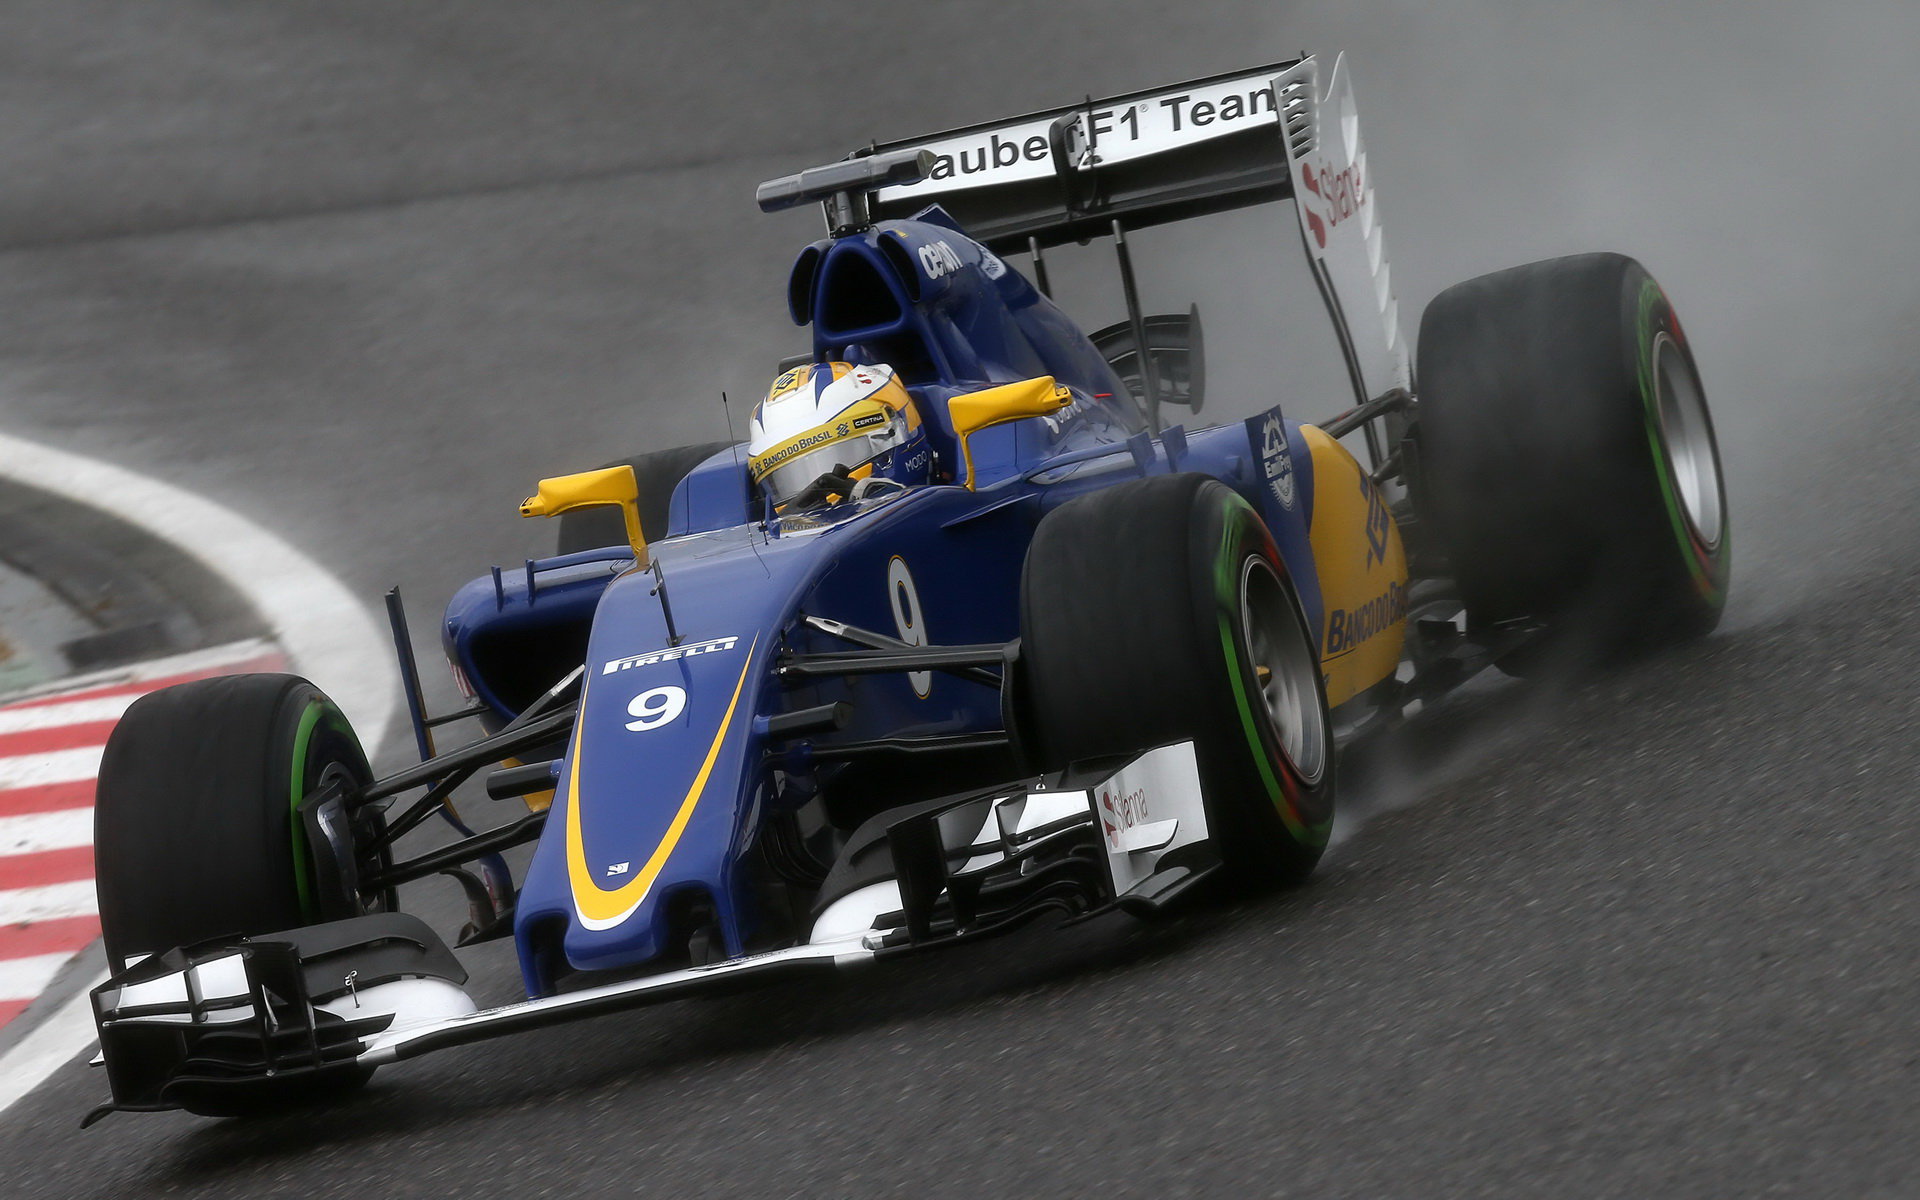 Marcus Ericsson, GP Japonska (Suzuka)